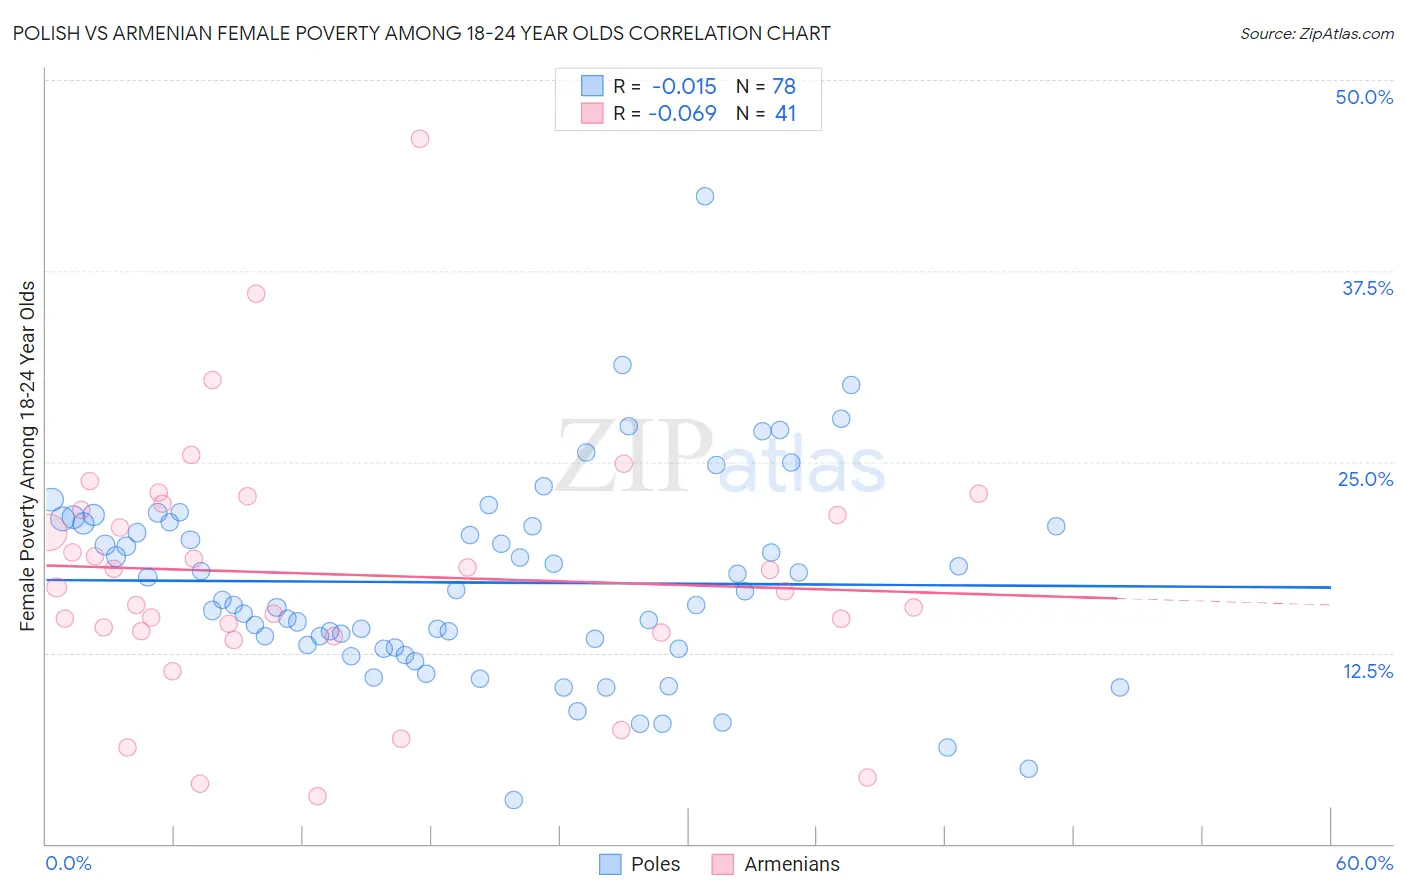 Polish vs Armenian Female Poverty Among 18-24 Year Olds